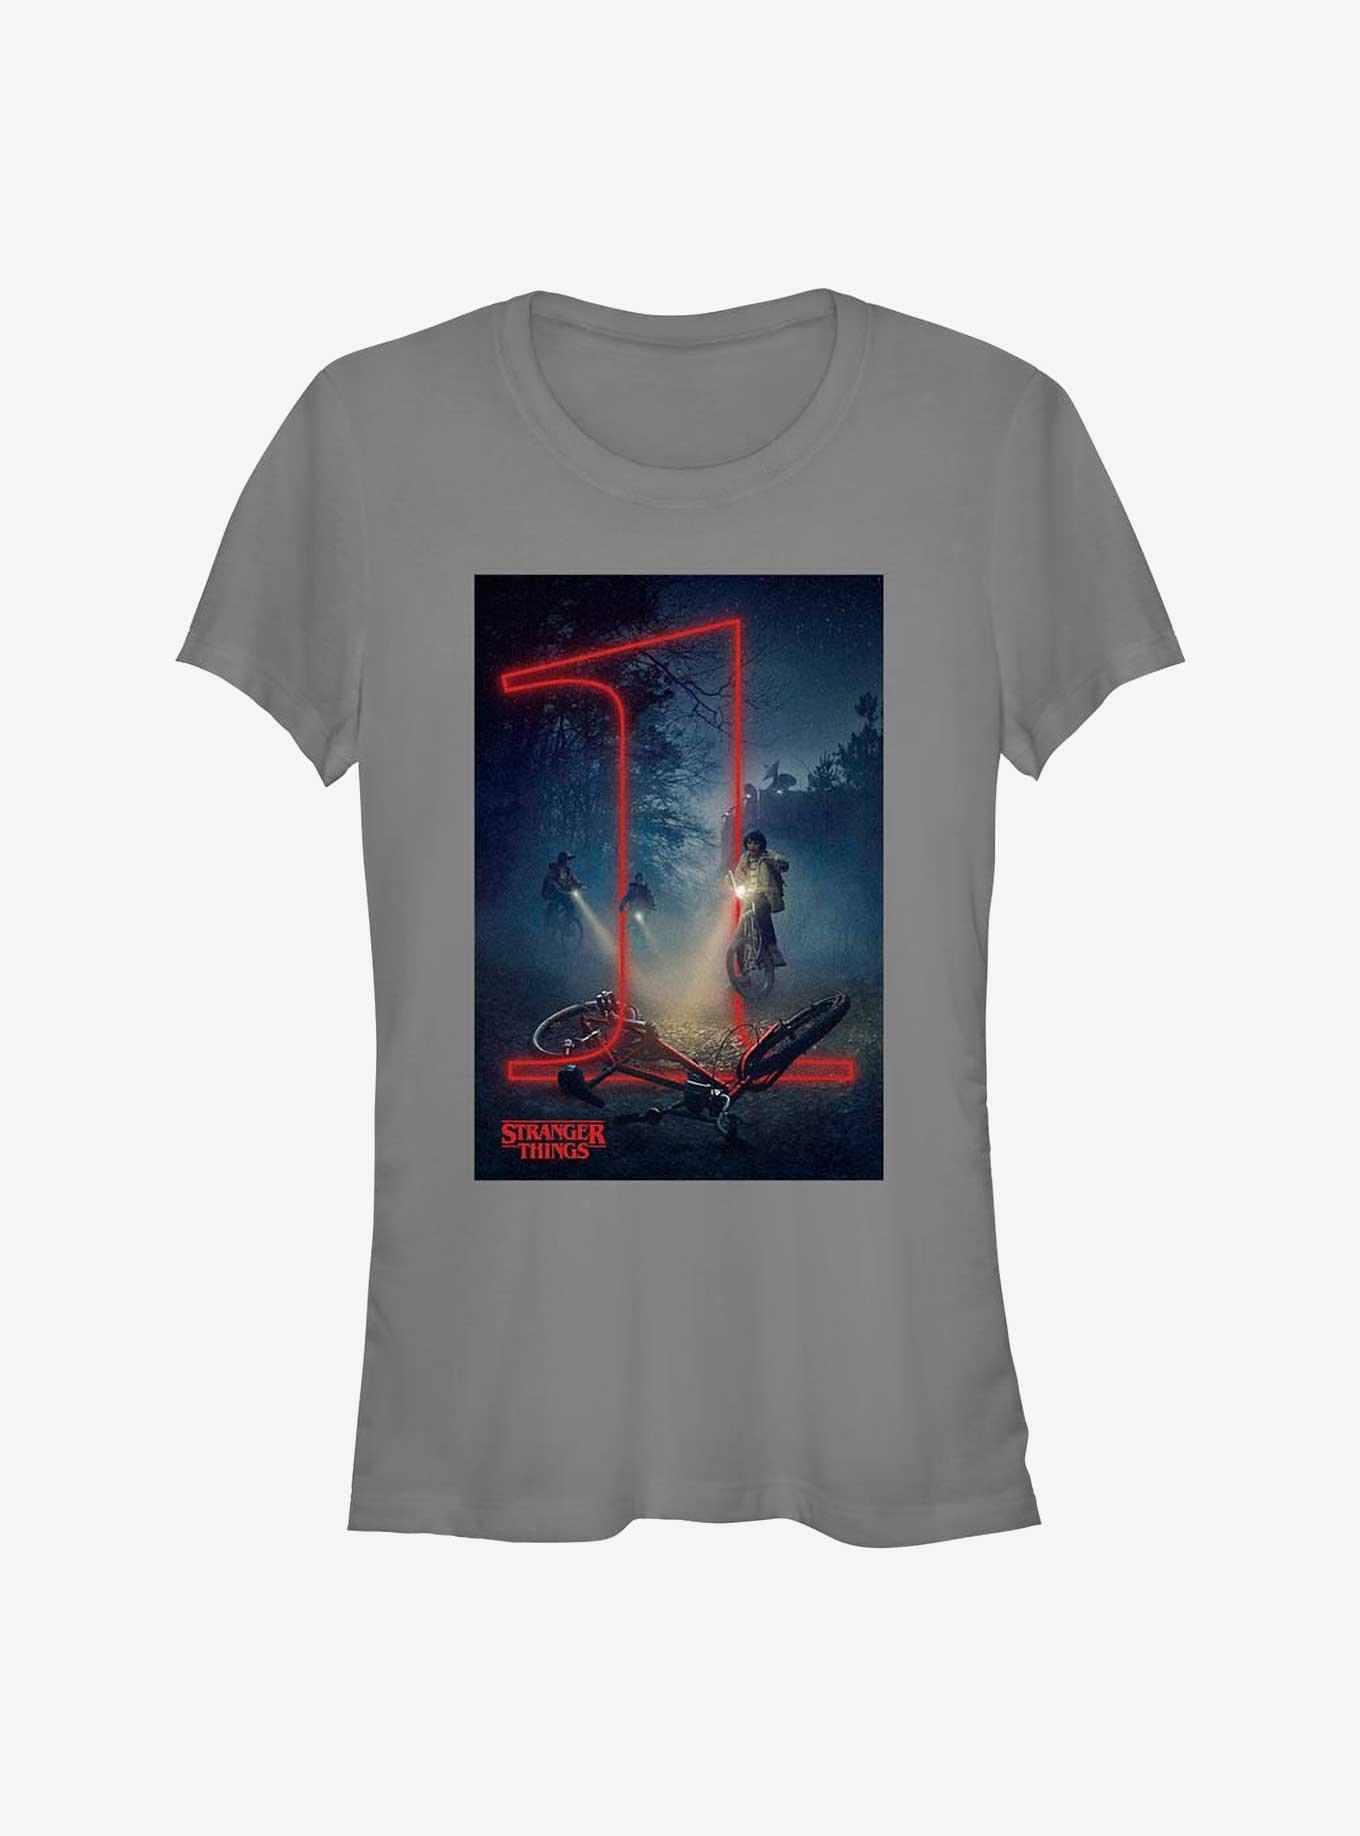 Stranger Things Season 1 Poster Girl's T-Shirt, CHARCOAL, hi-res